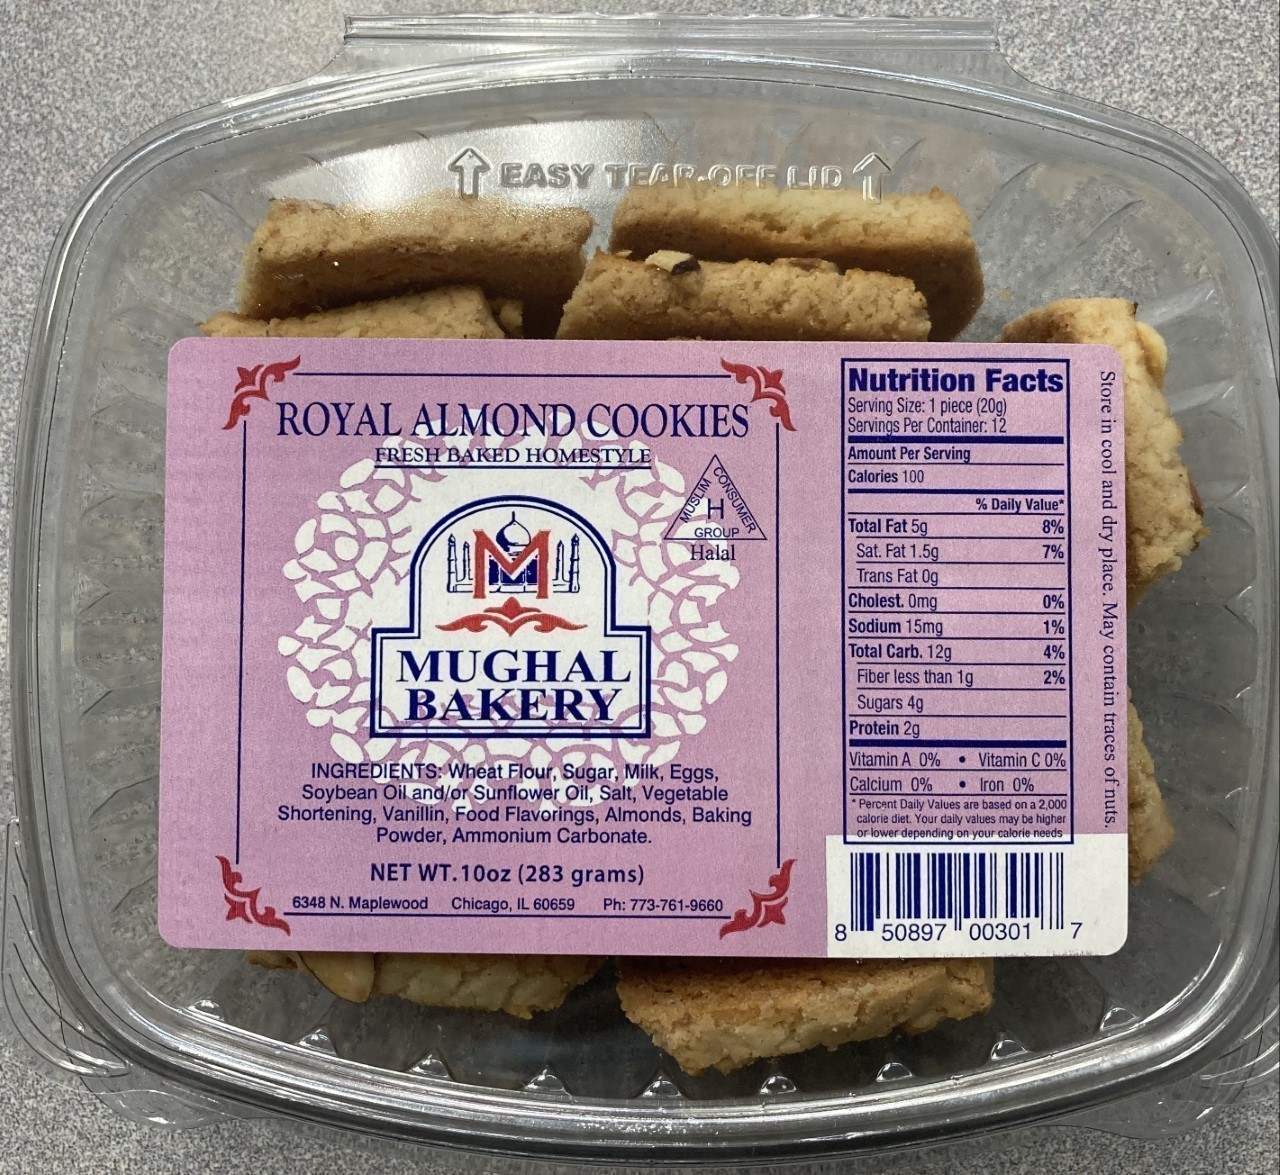 Mughal Bakery Royal Almond Cookies 10 oz